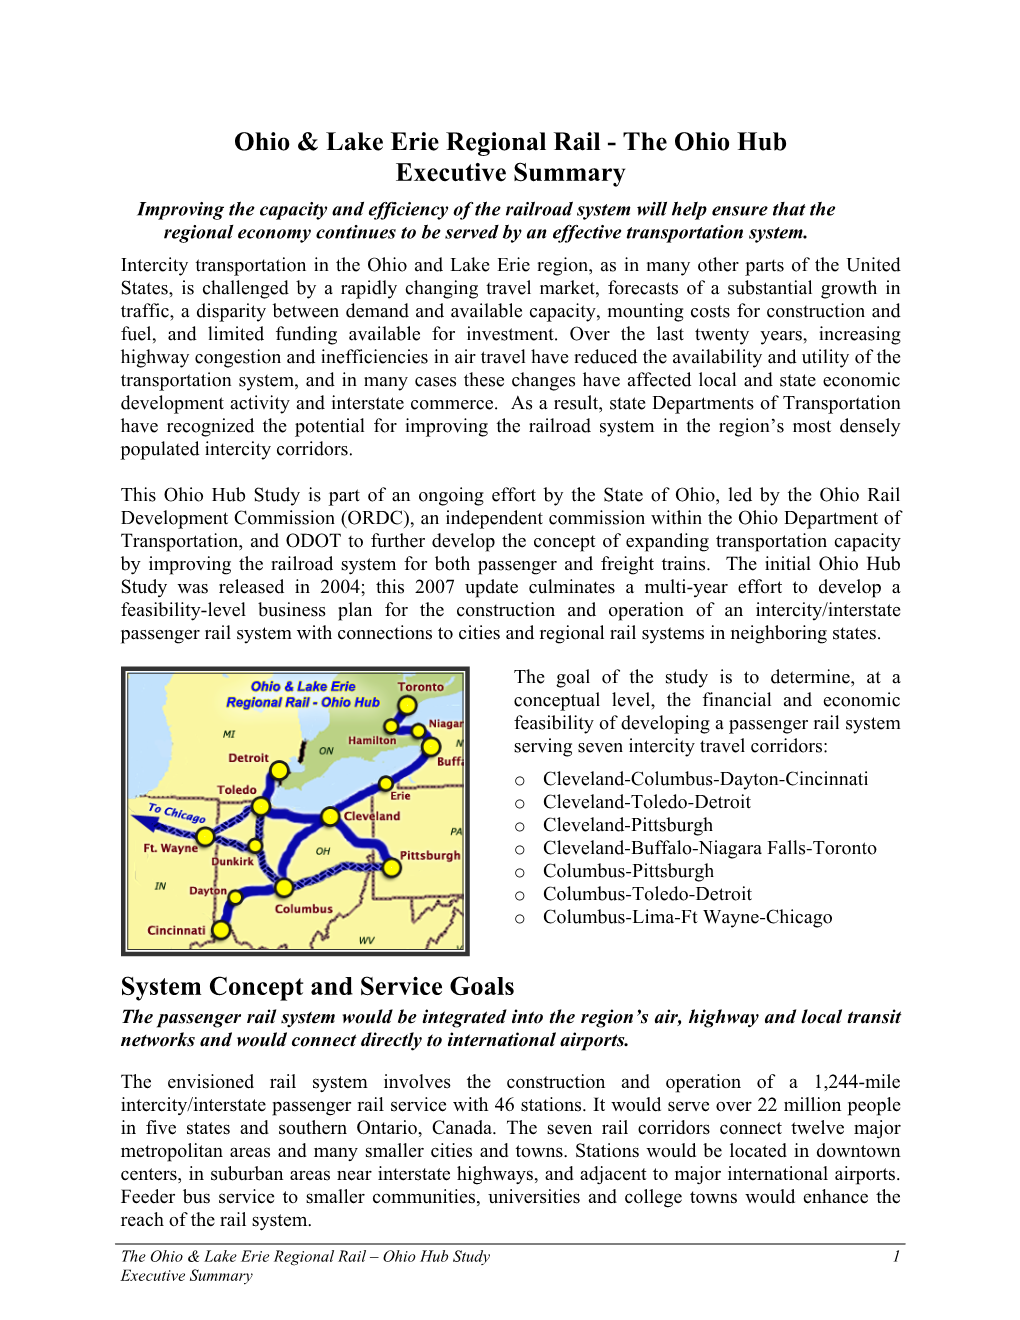 The Ohio & Lake Erie Regional Rail Ohio Hub Study 2007